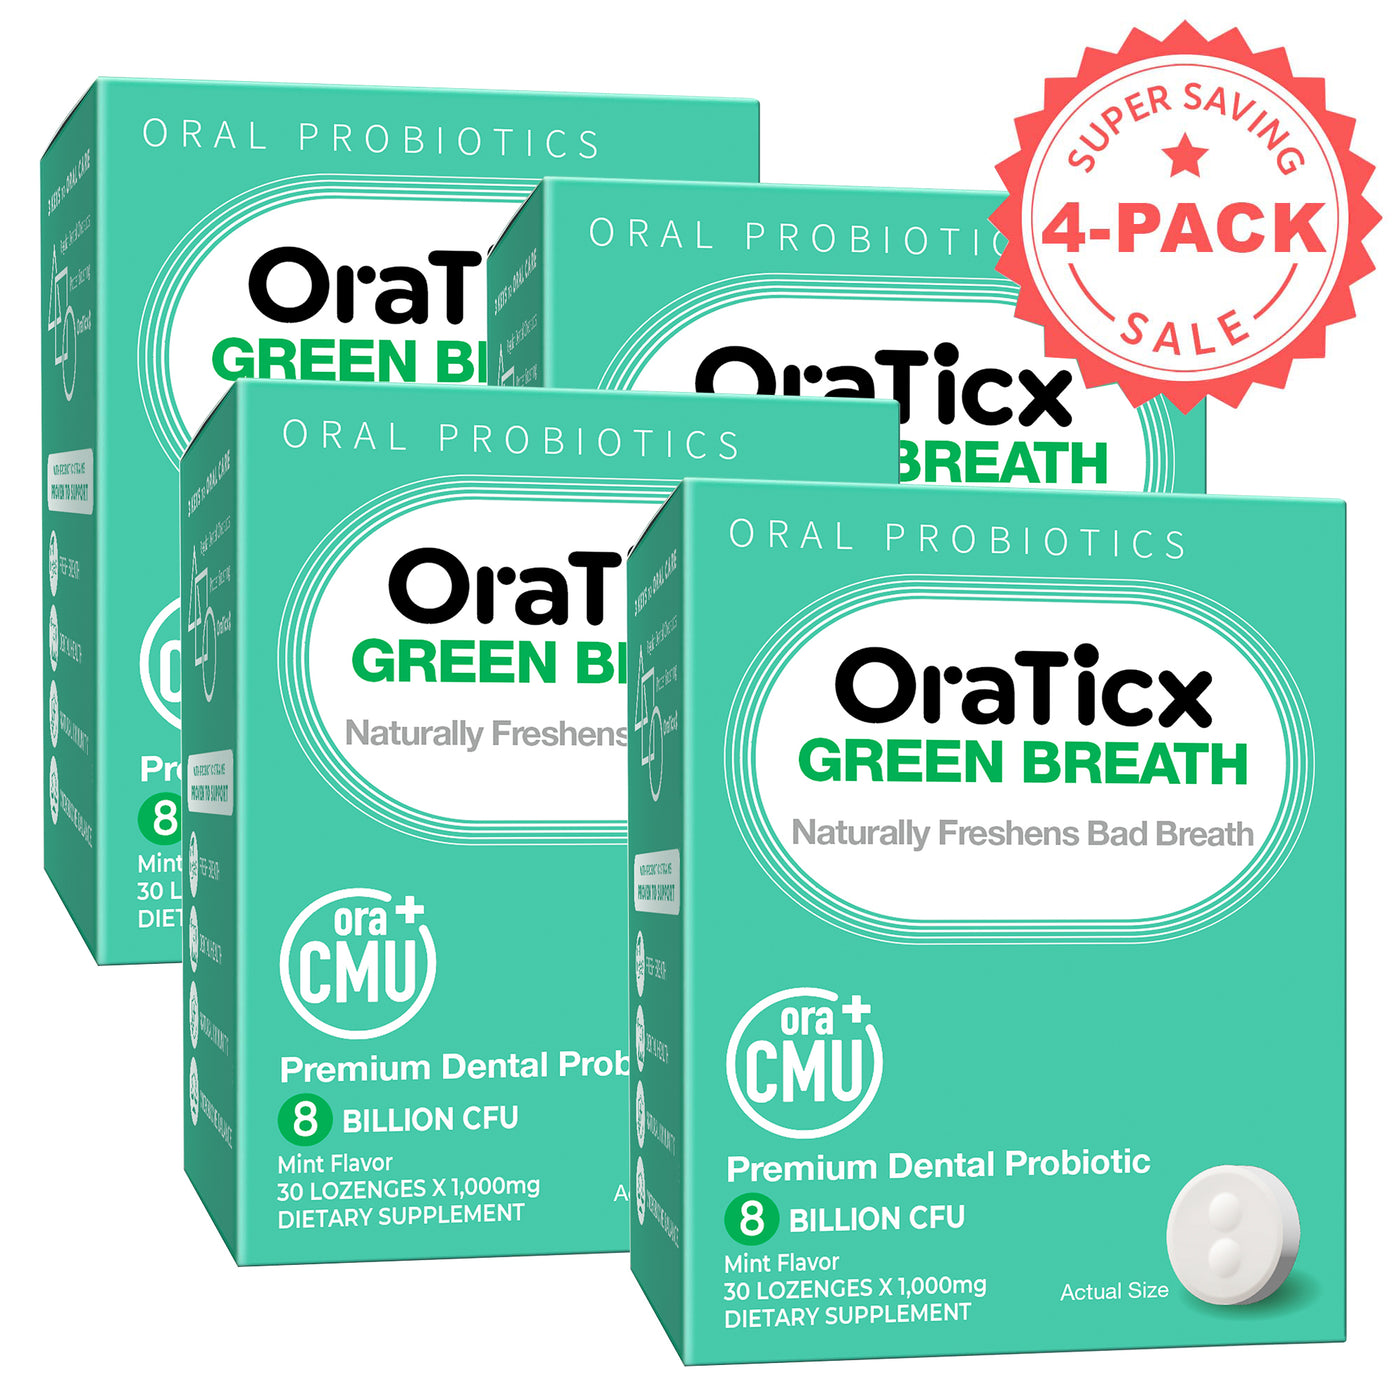 OraTicx oral and dental probiotics for bad breath. Naturally freshens breath with unique oral probiotic